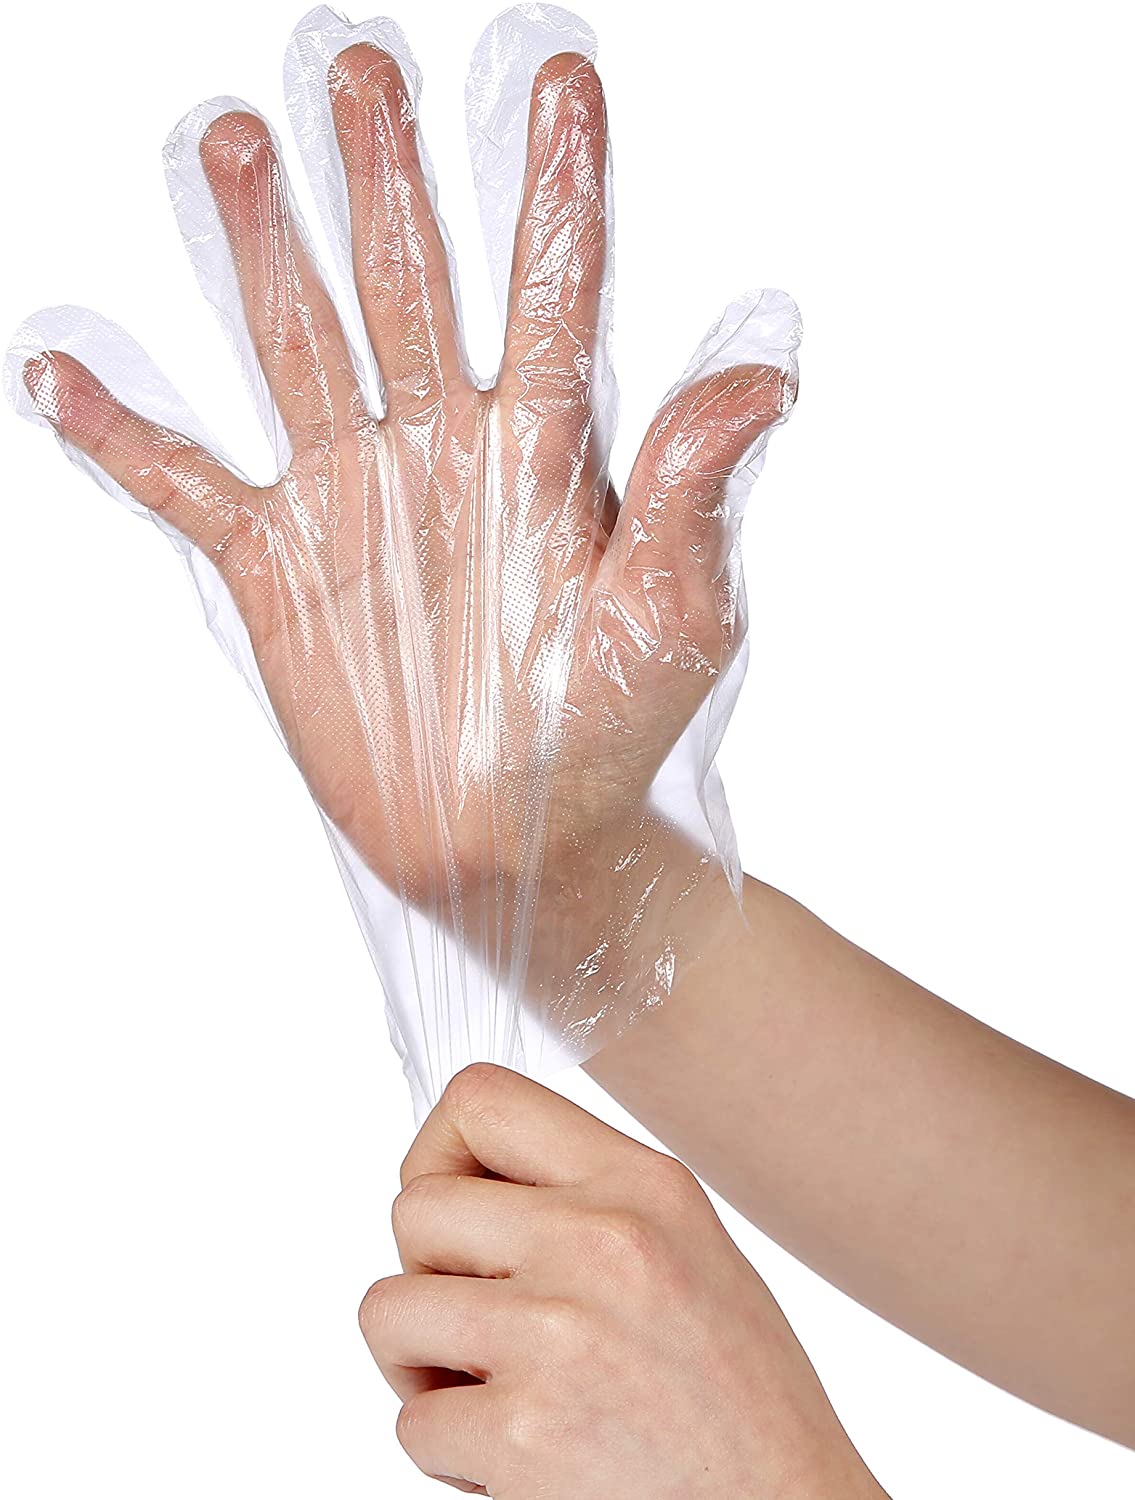 SUGIFT 500 PCS Plastic Disposable Gloves, Transparent, One Size Fits Most